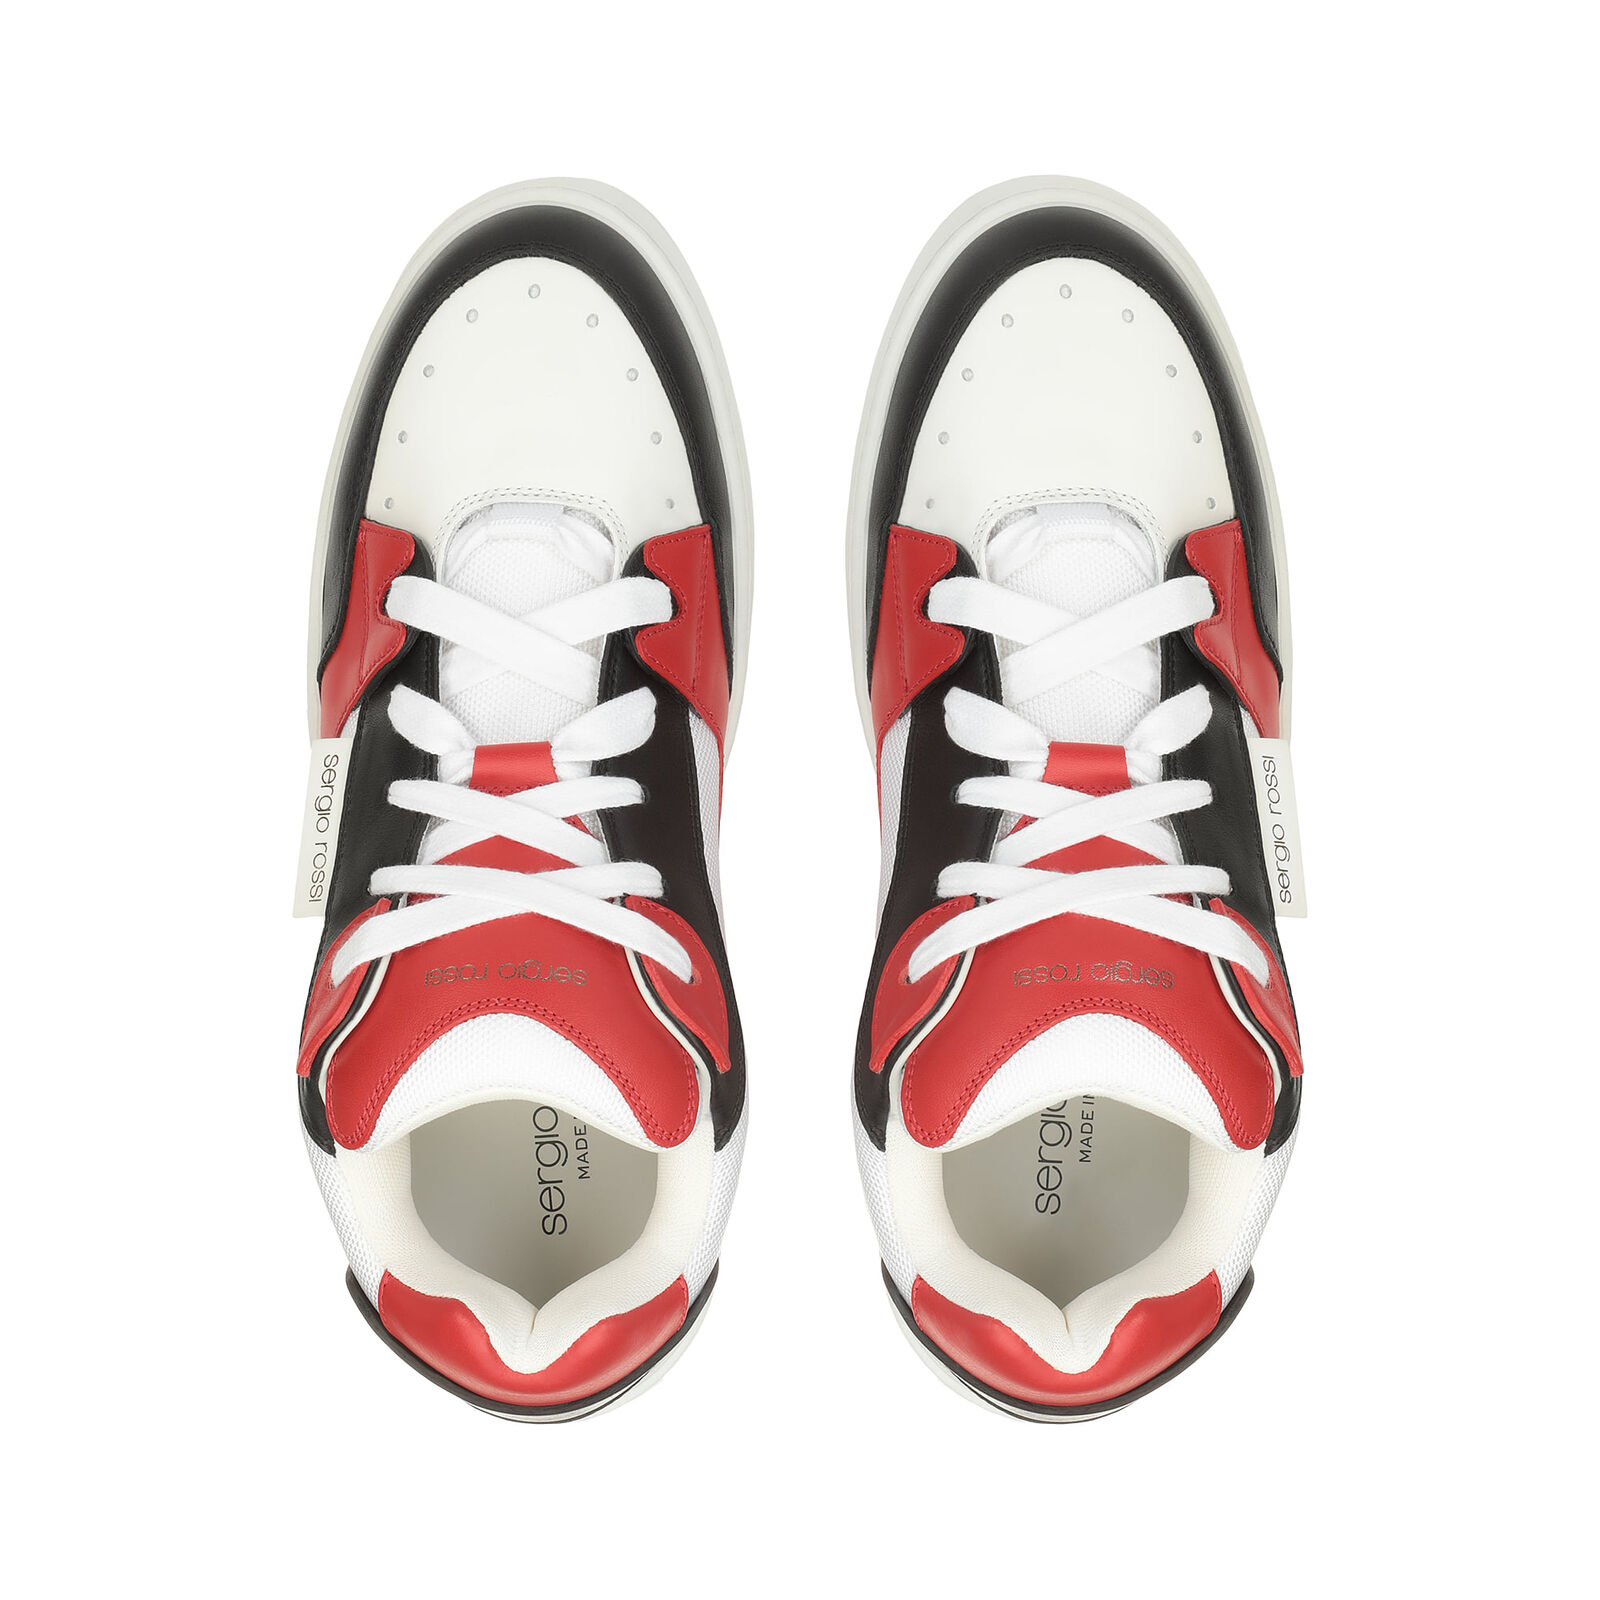 sr1 Addict - Sneakers Rosso, 3